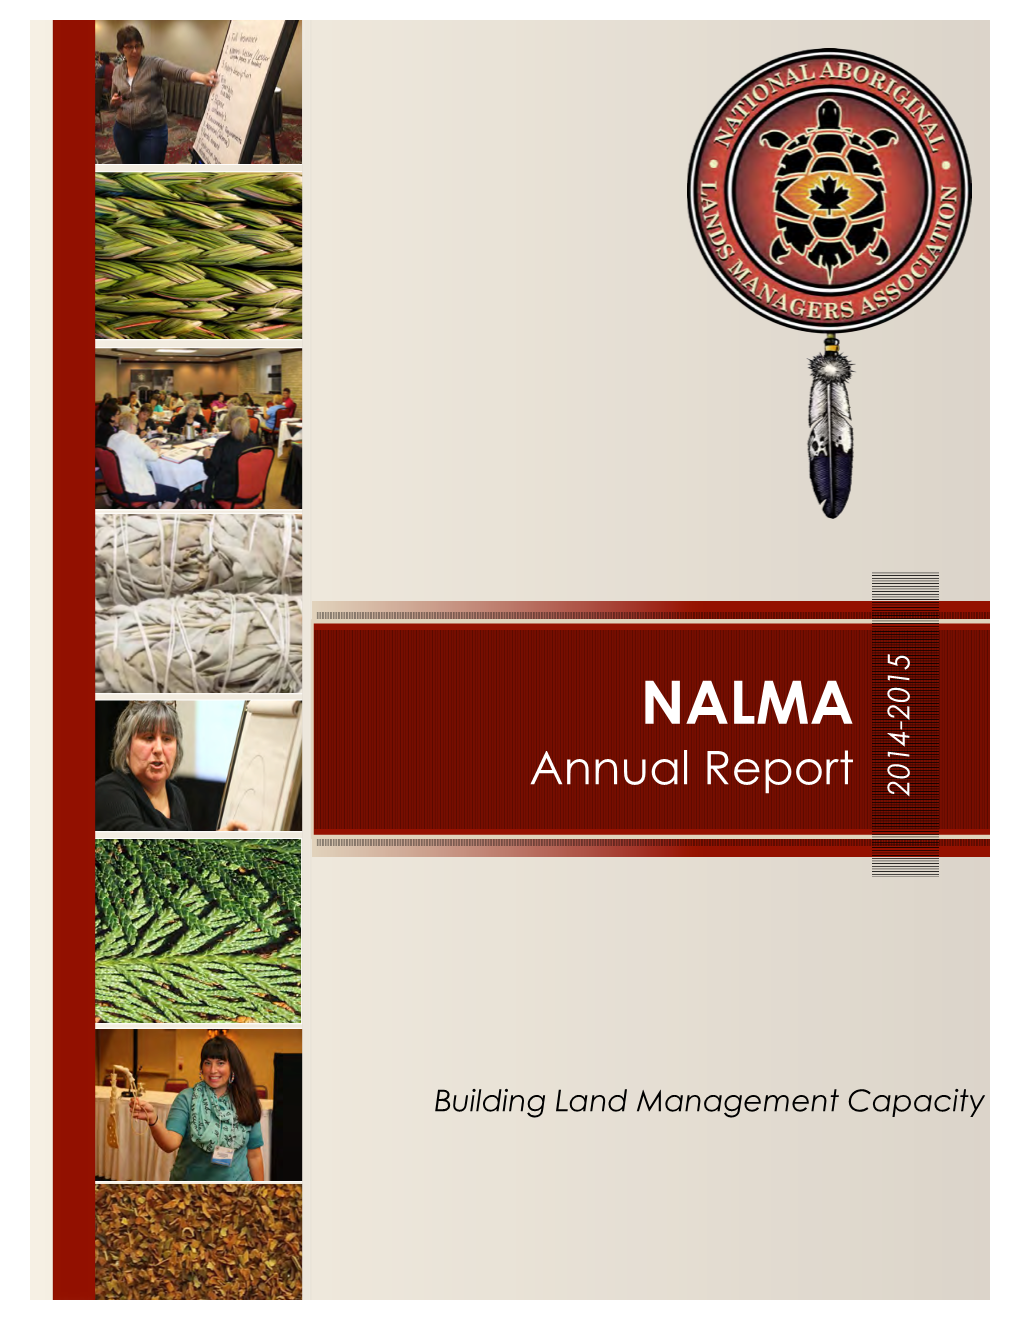 NALMA - Annual Report 2014